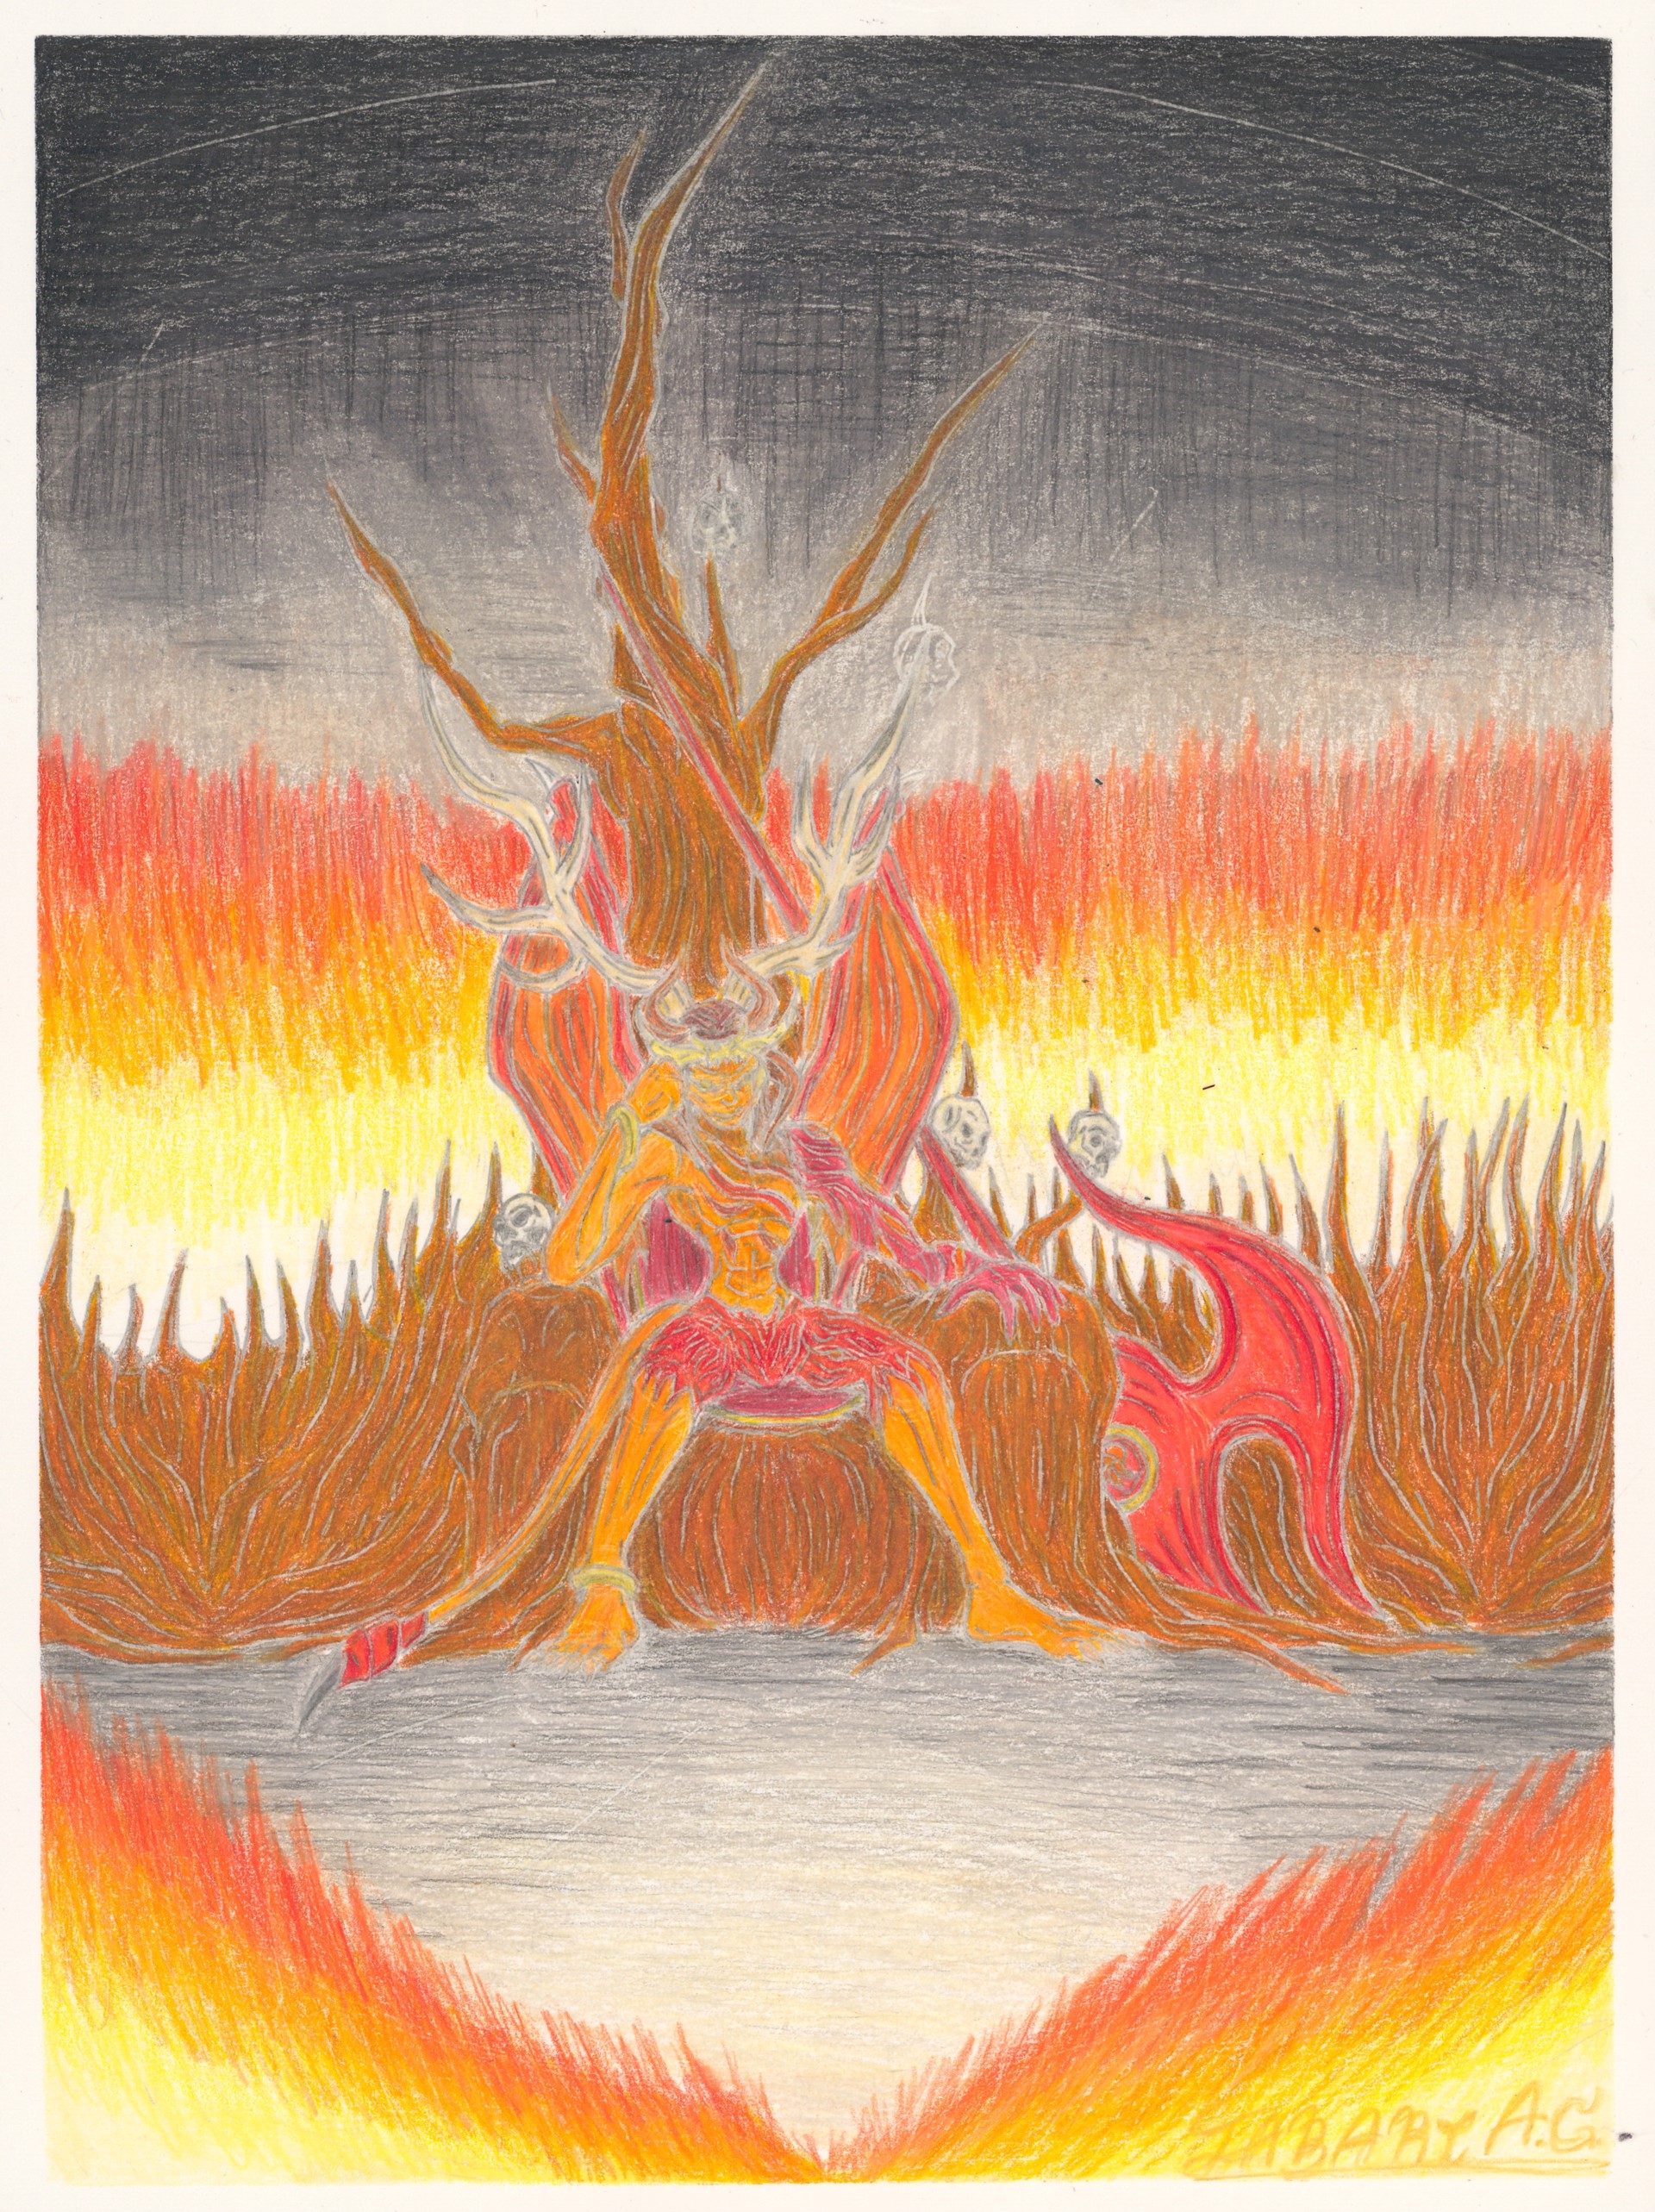 King of Fire by Jabari Cooper